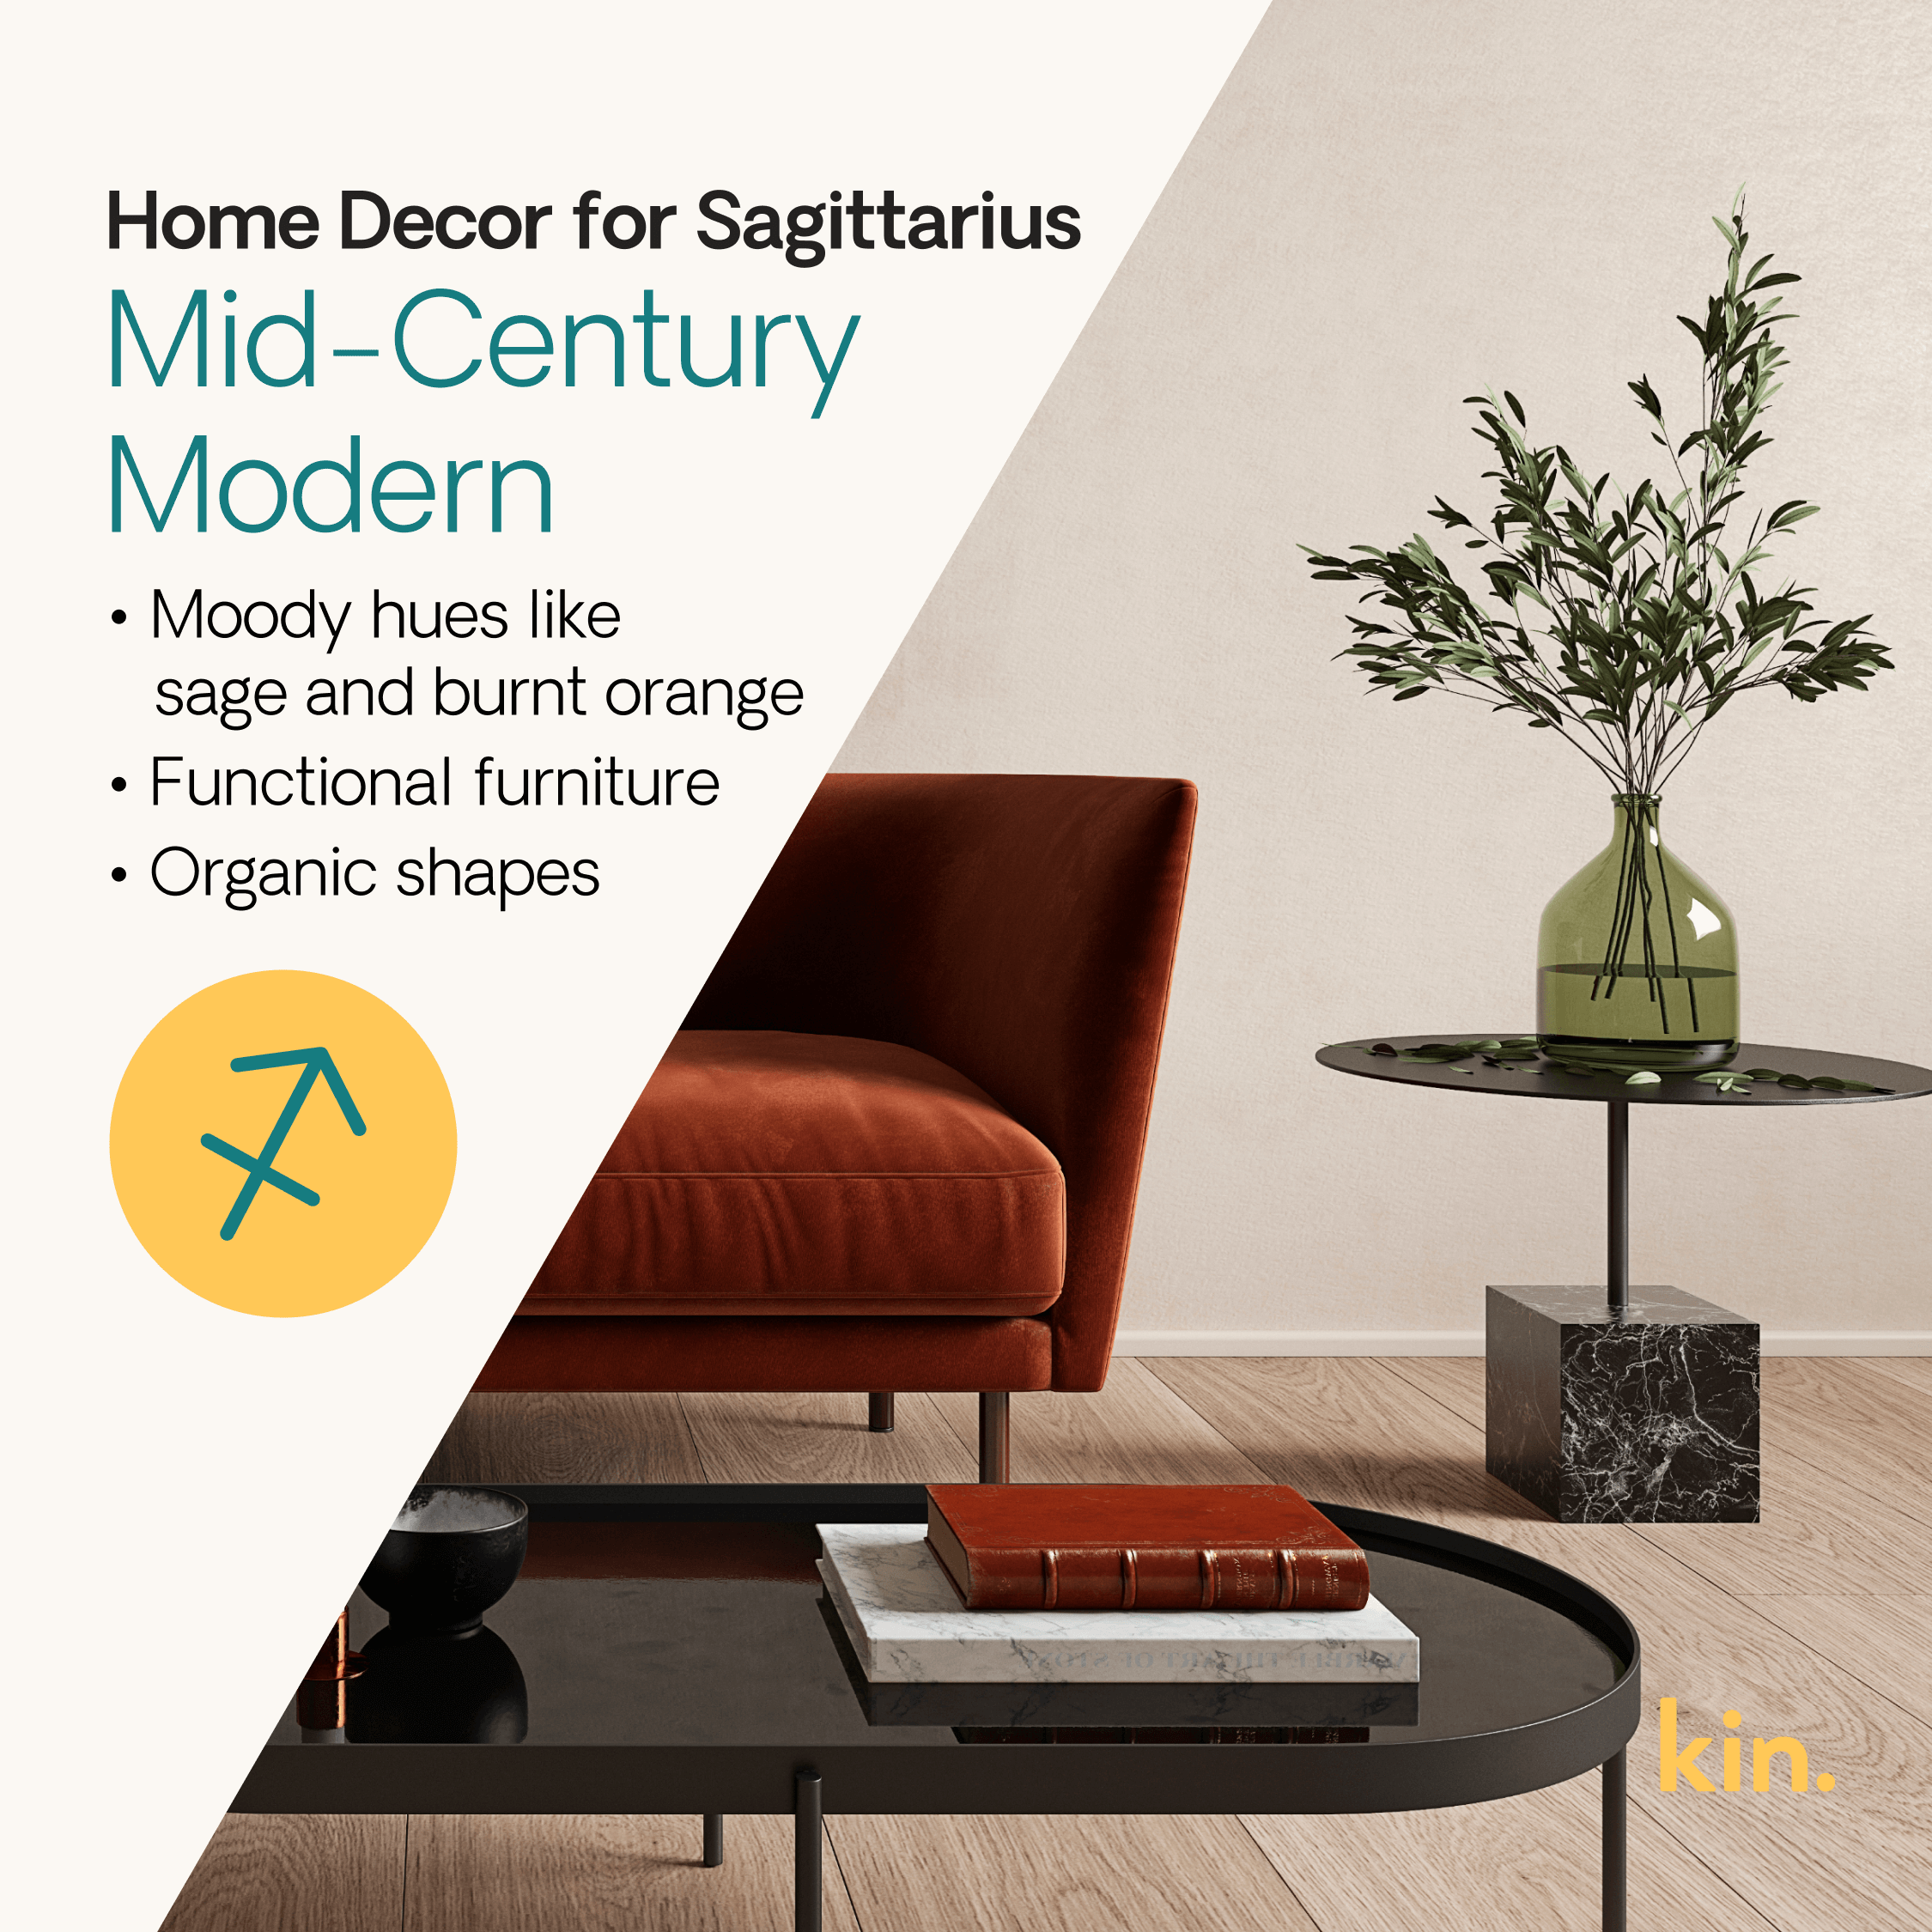 Home Decor for Sagittarius: Mid-Century Modern Organic shapes Functional, streamlined furniture Moody hues like sage and burnt orange